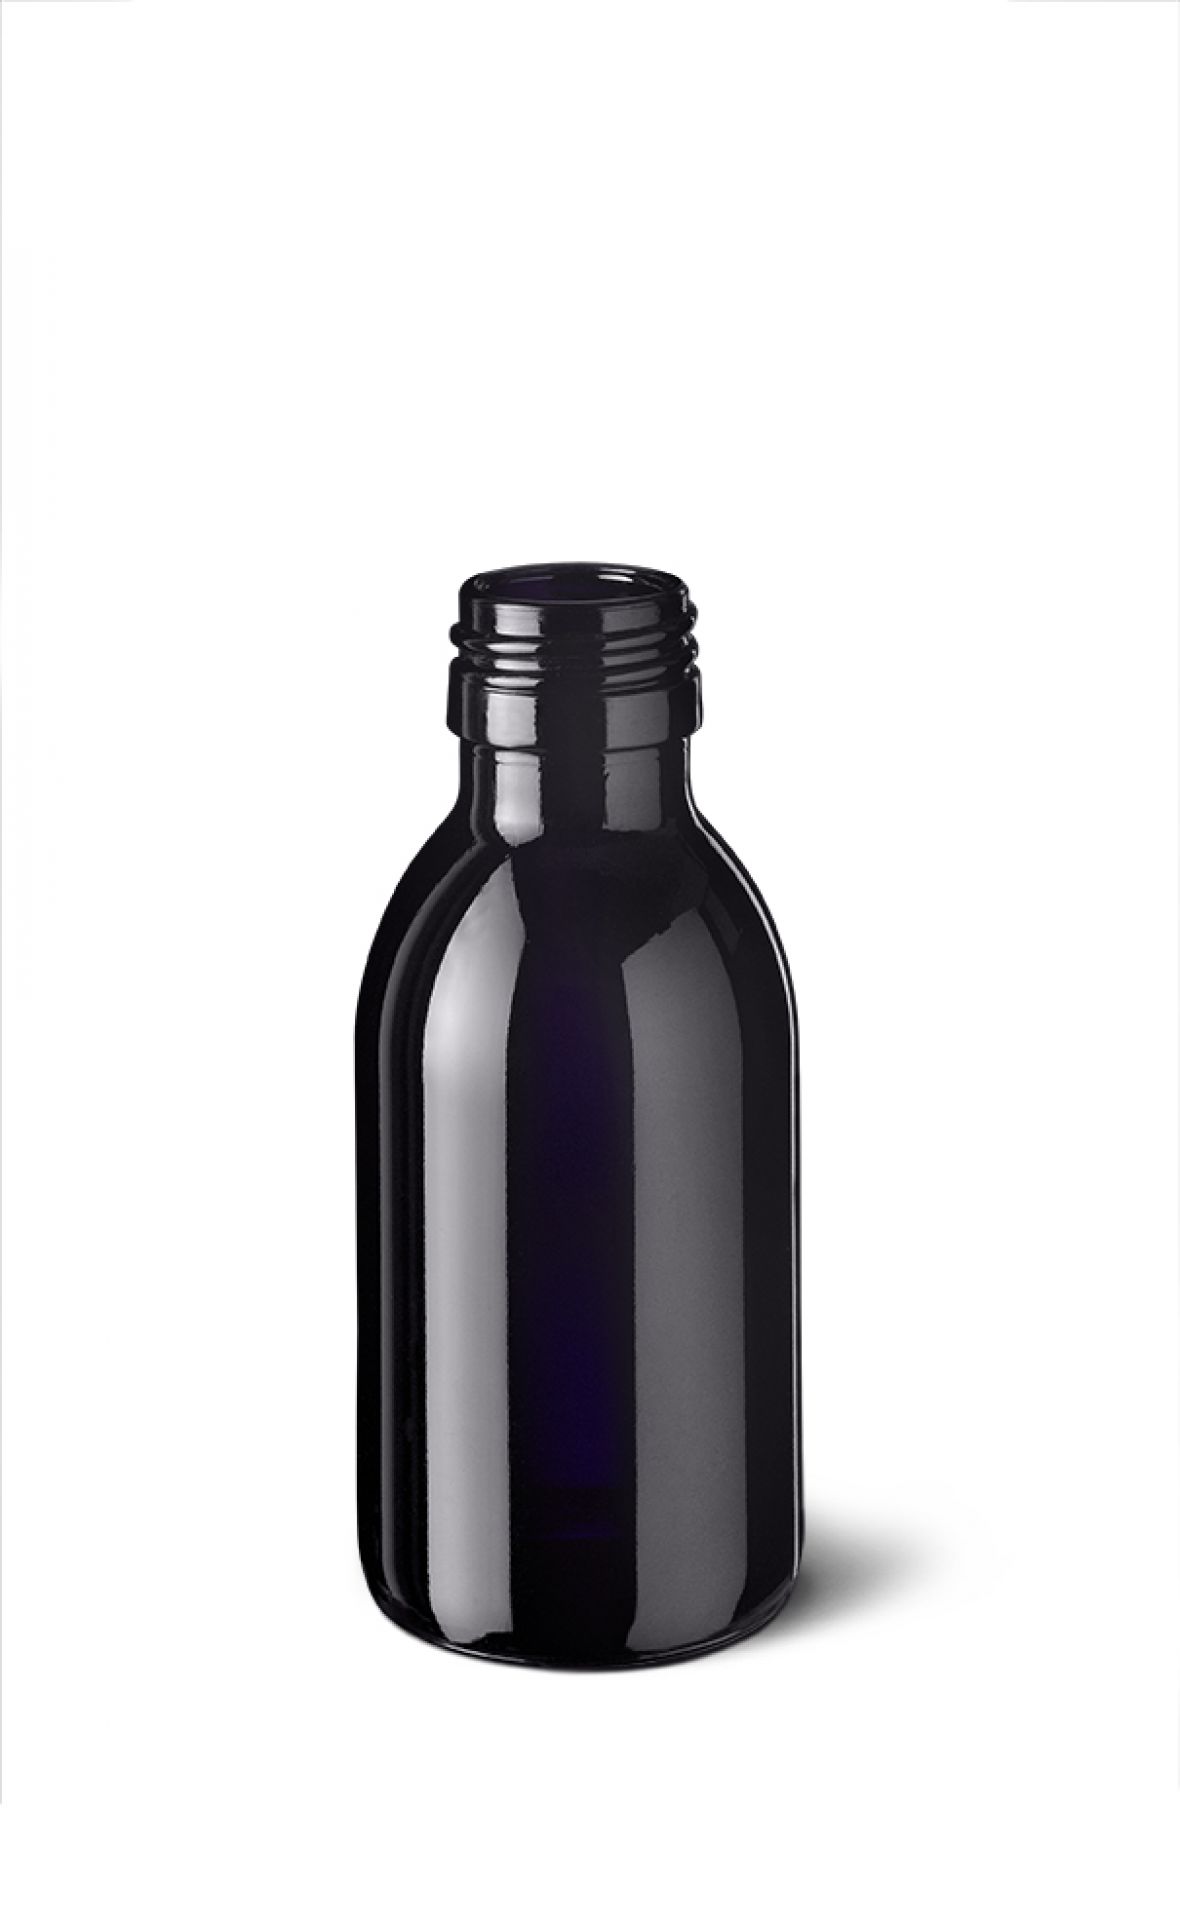 Syrup bottle Aquarius 100ml, PP28, Miron